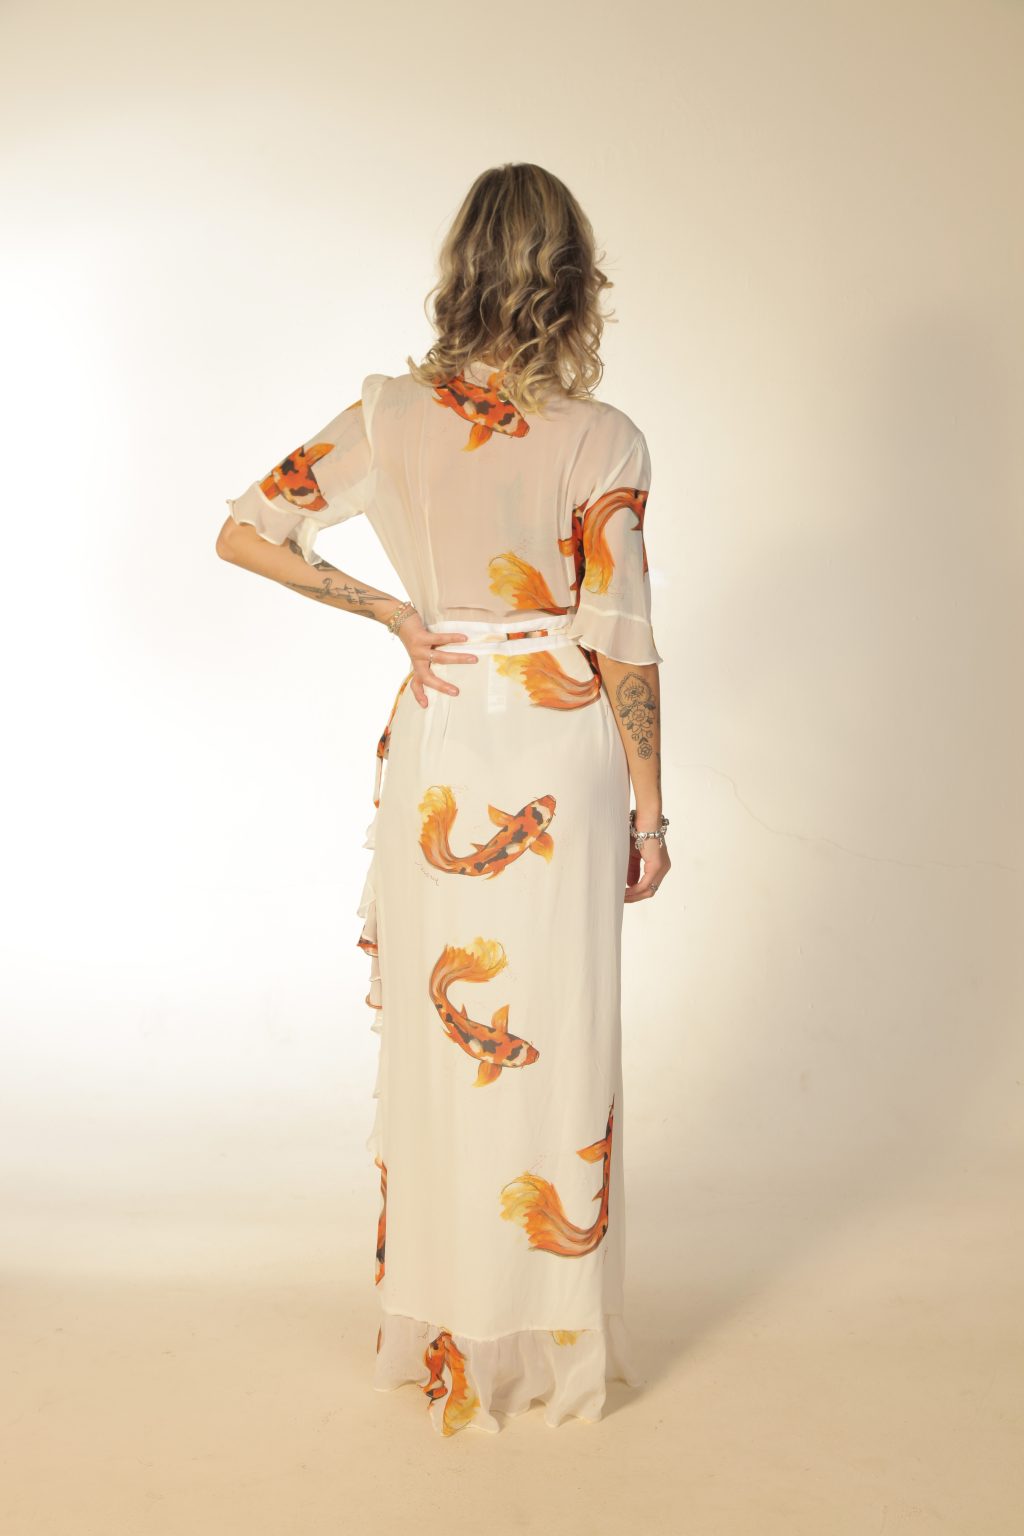 Mulher loira usando um vestido longo transpassado manga curta 100% seda estampa de carpas laranja exclusiva desenvolvida por maria sanz kimono quimono leveza praticidade conforto elegância